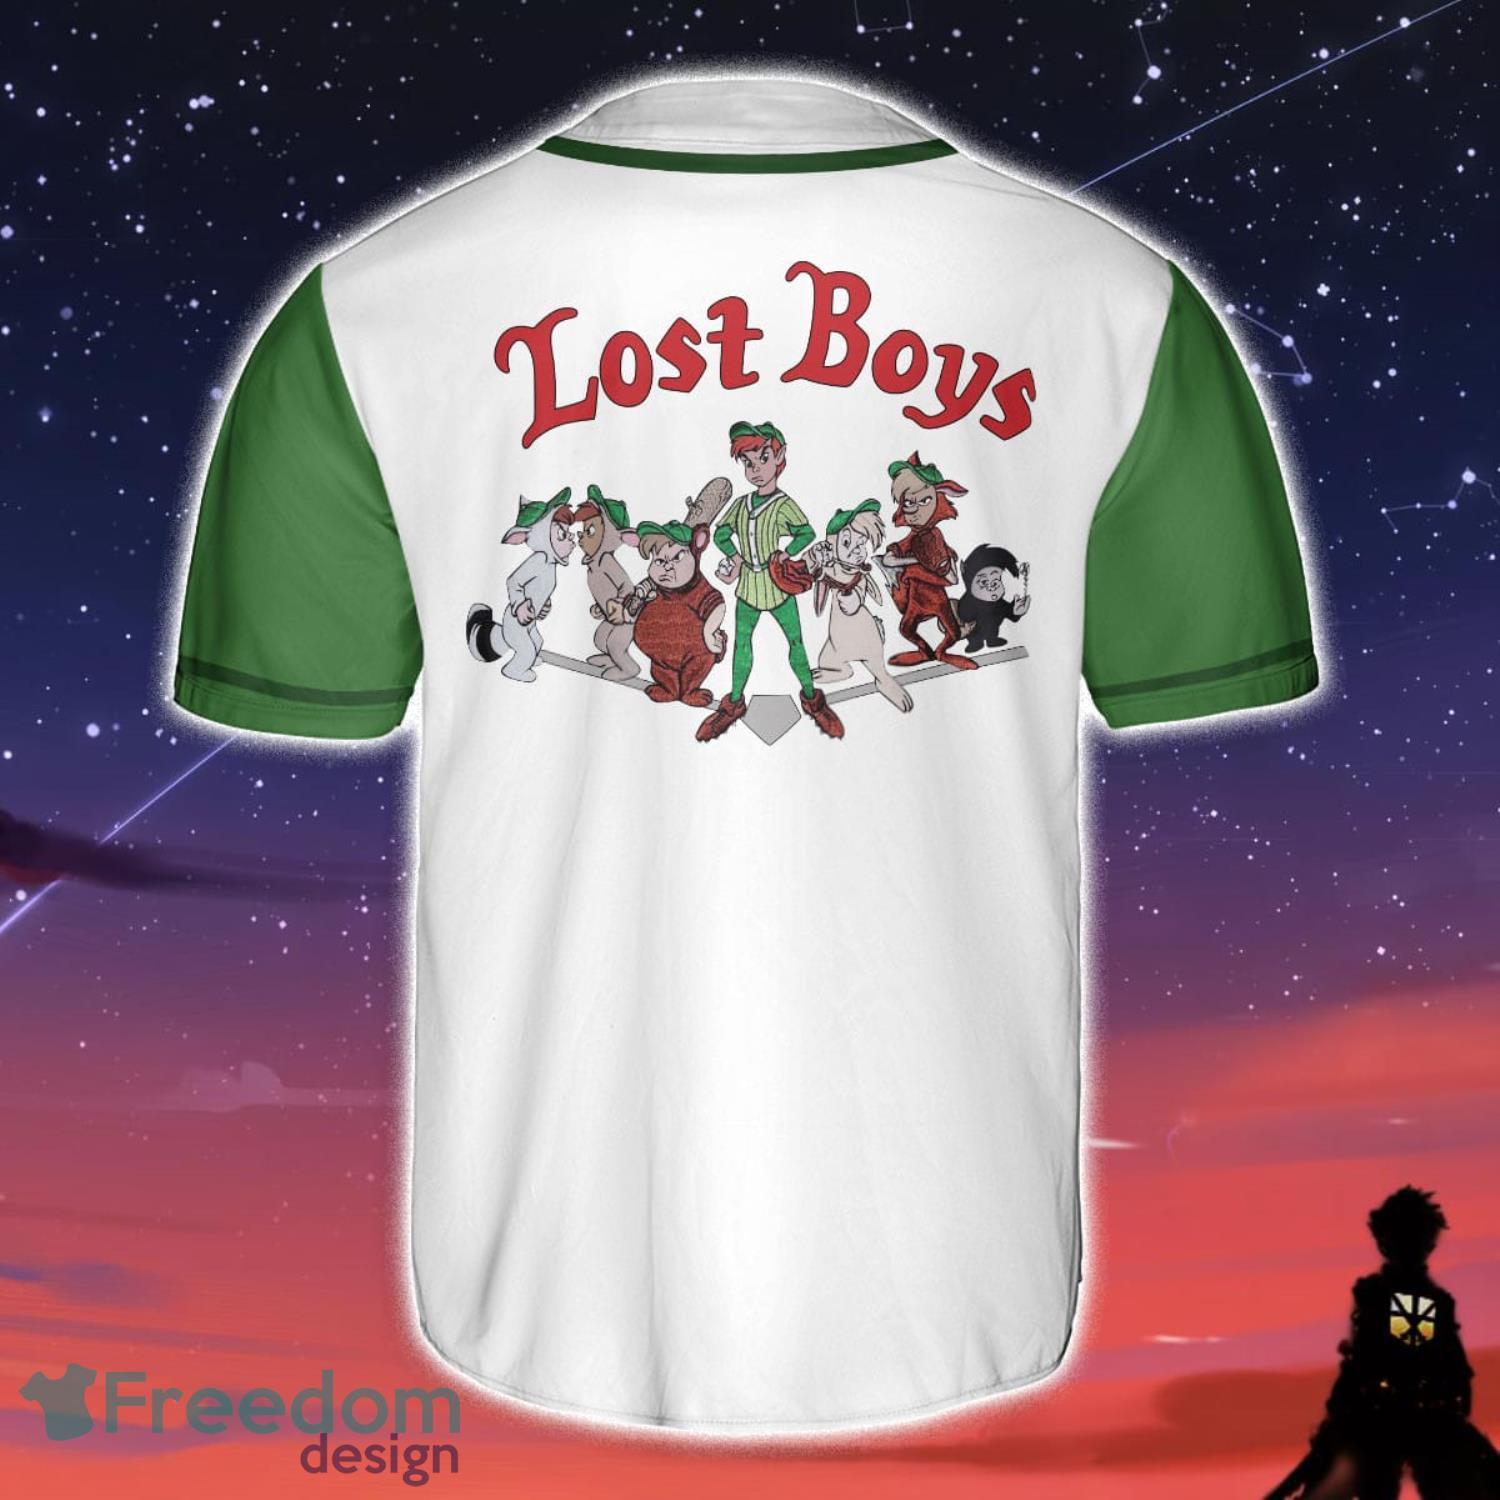 Lost Boys Peter Pan Neverland Island Custom Baseball Jersey Youth XS